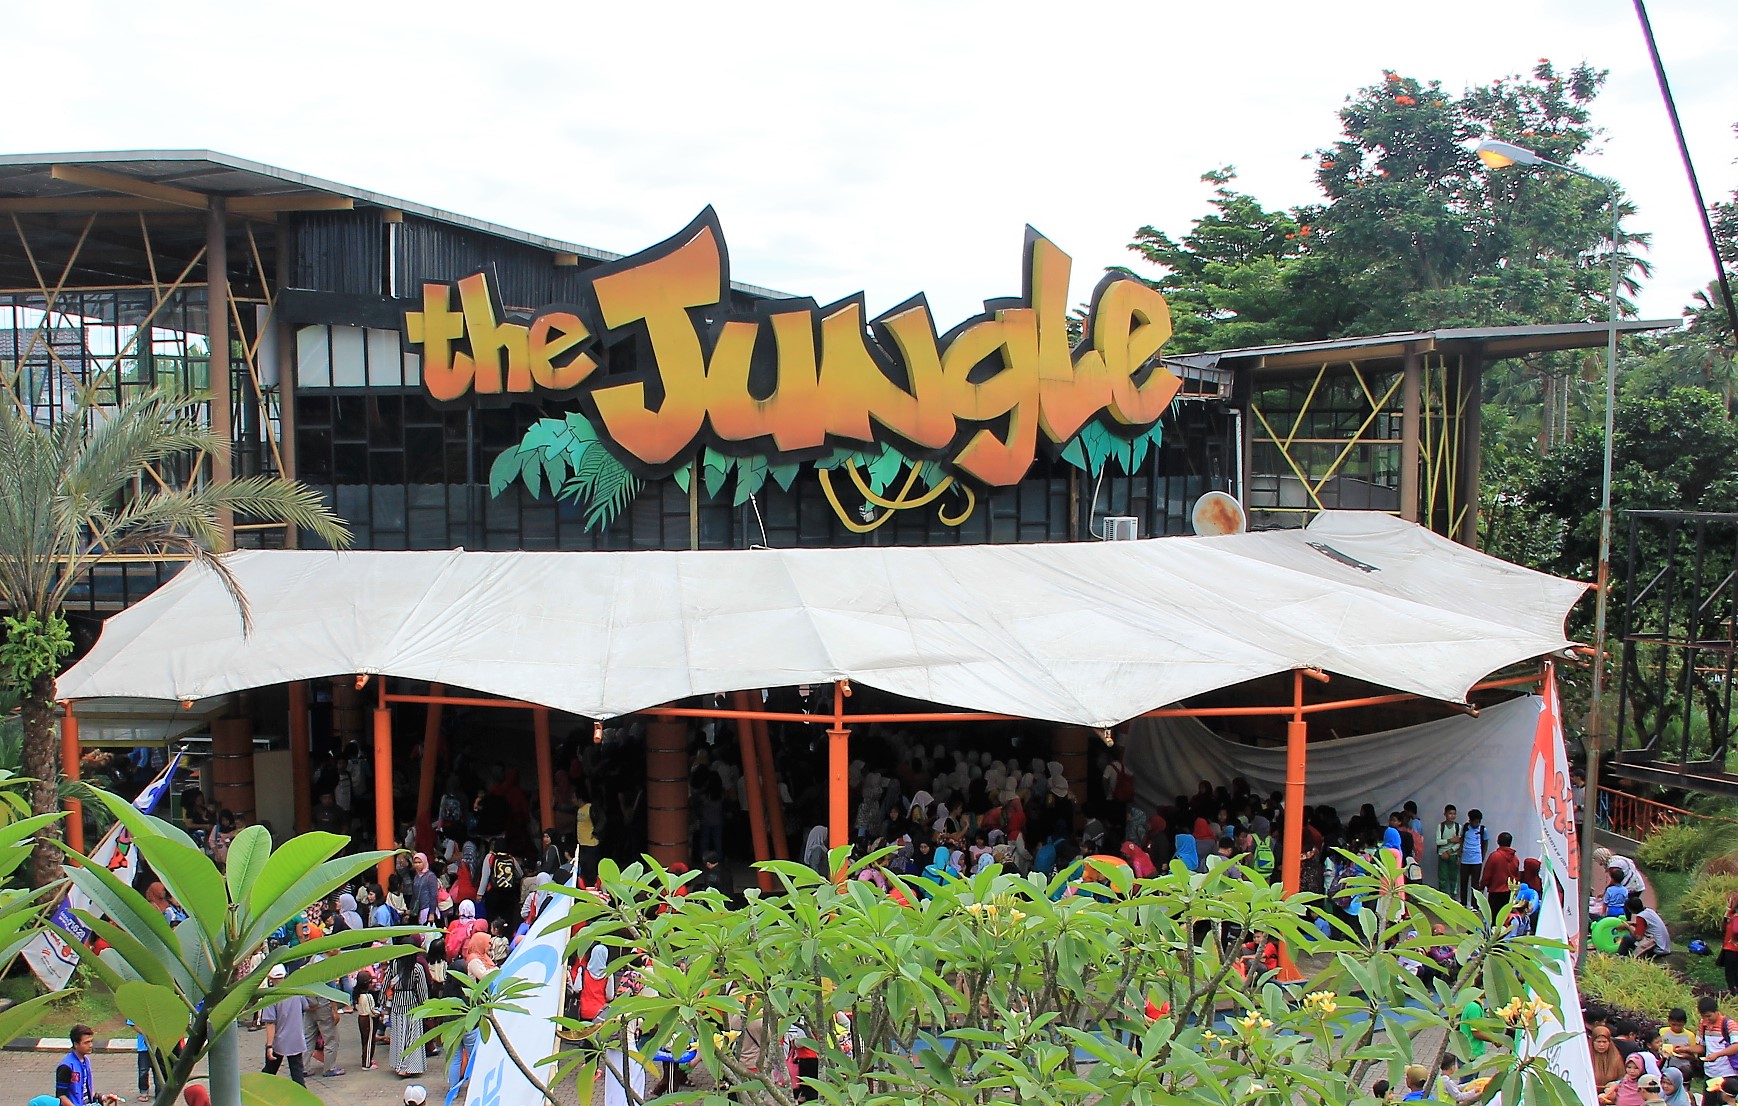 Jungleland